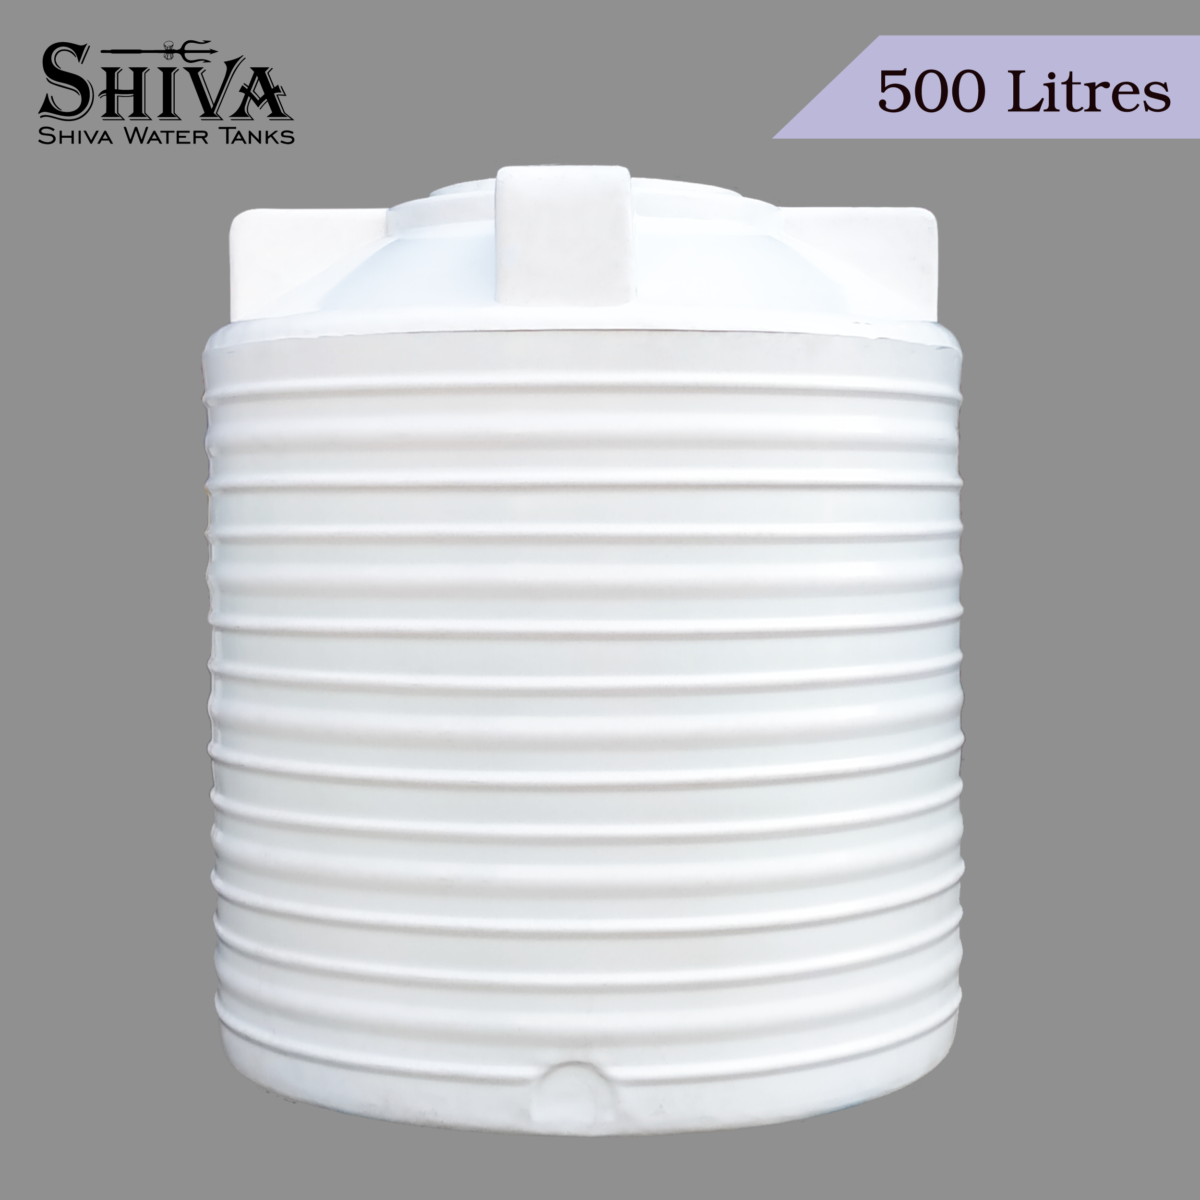 500 Litres - SHIVA Plus - 3 Layers